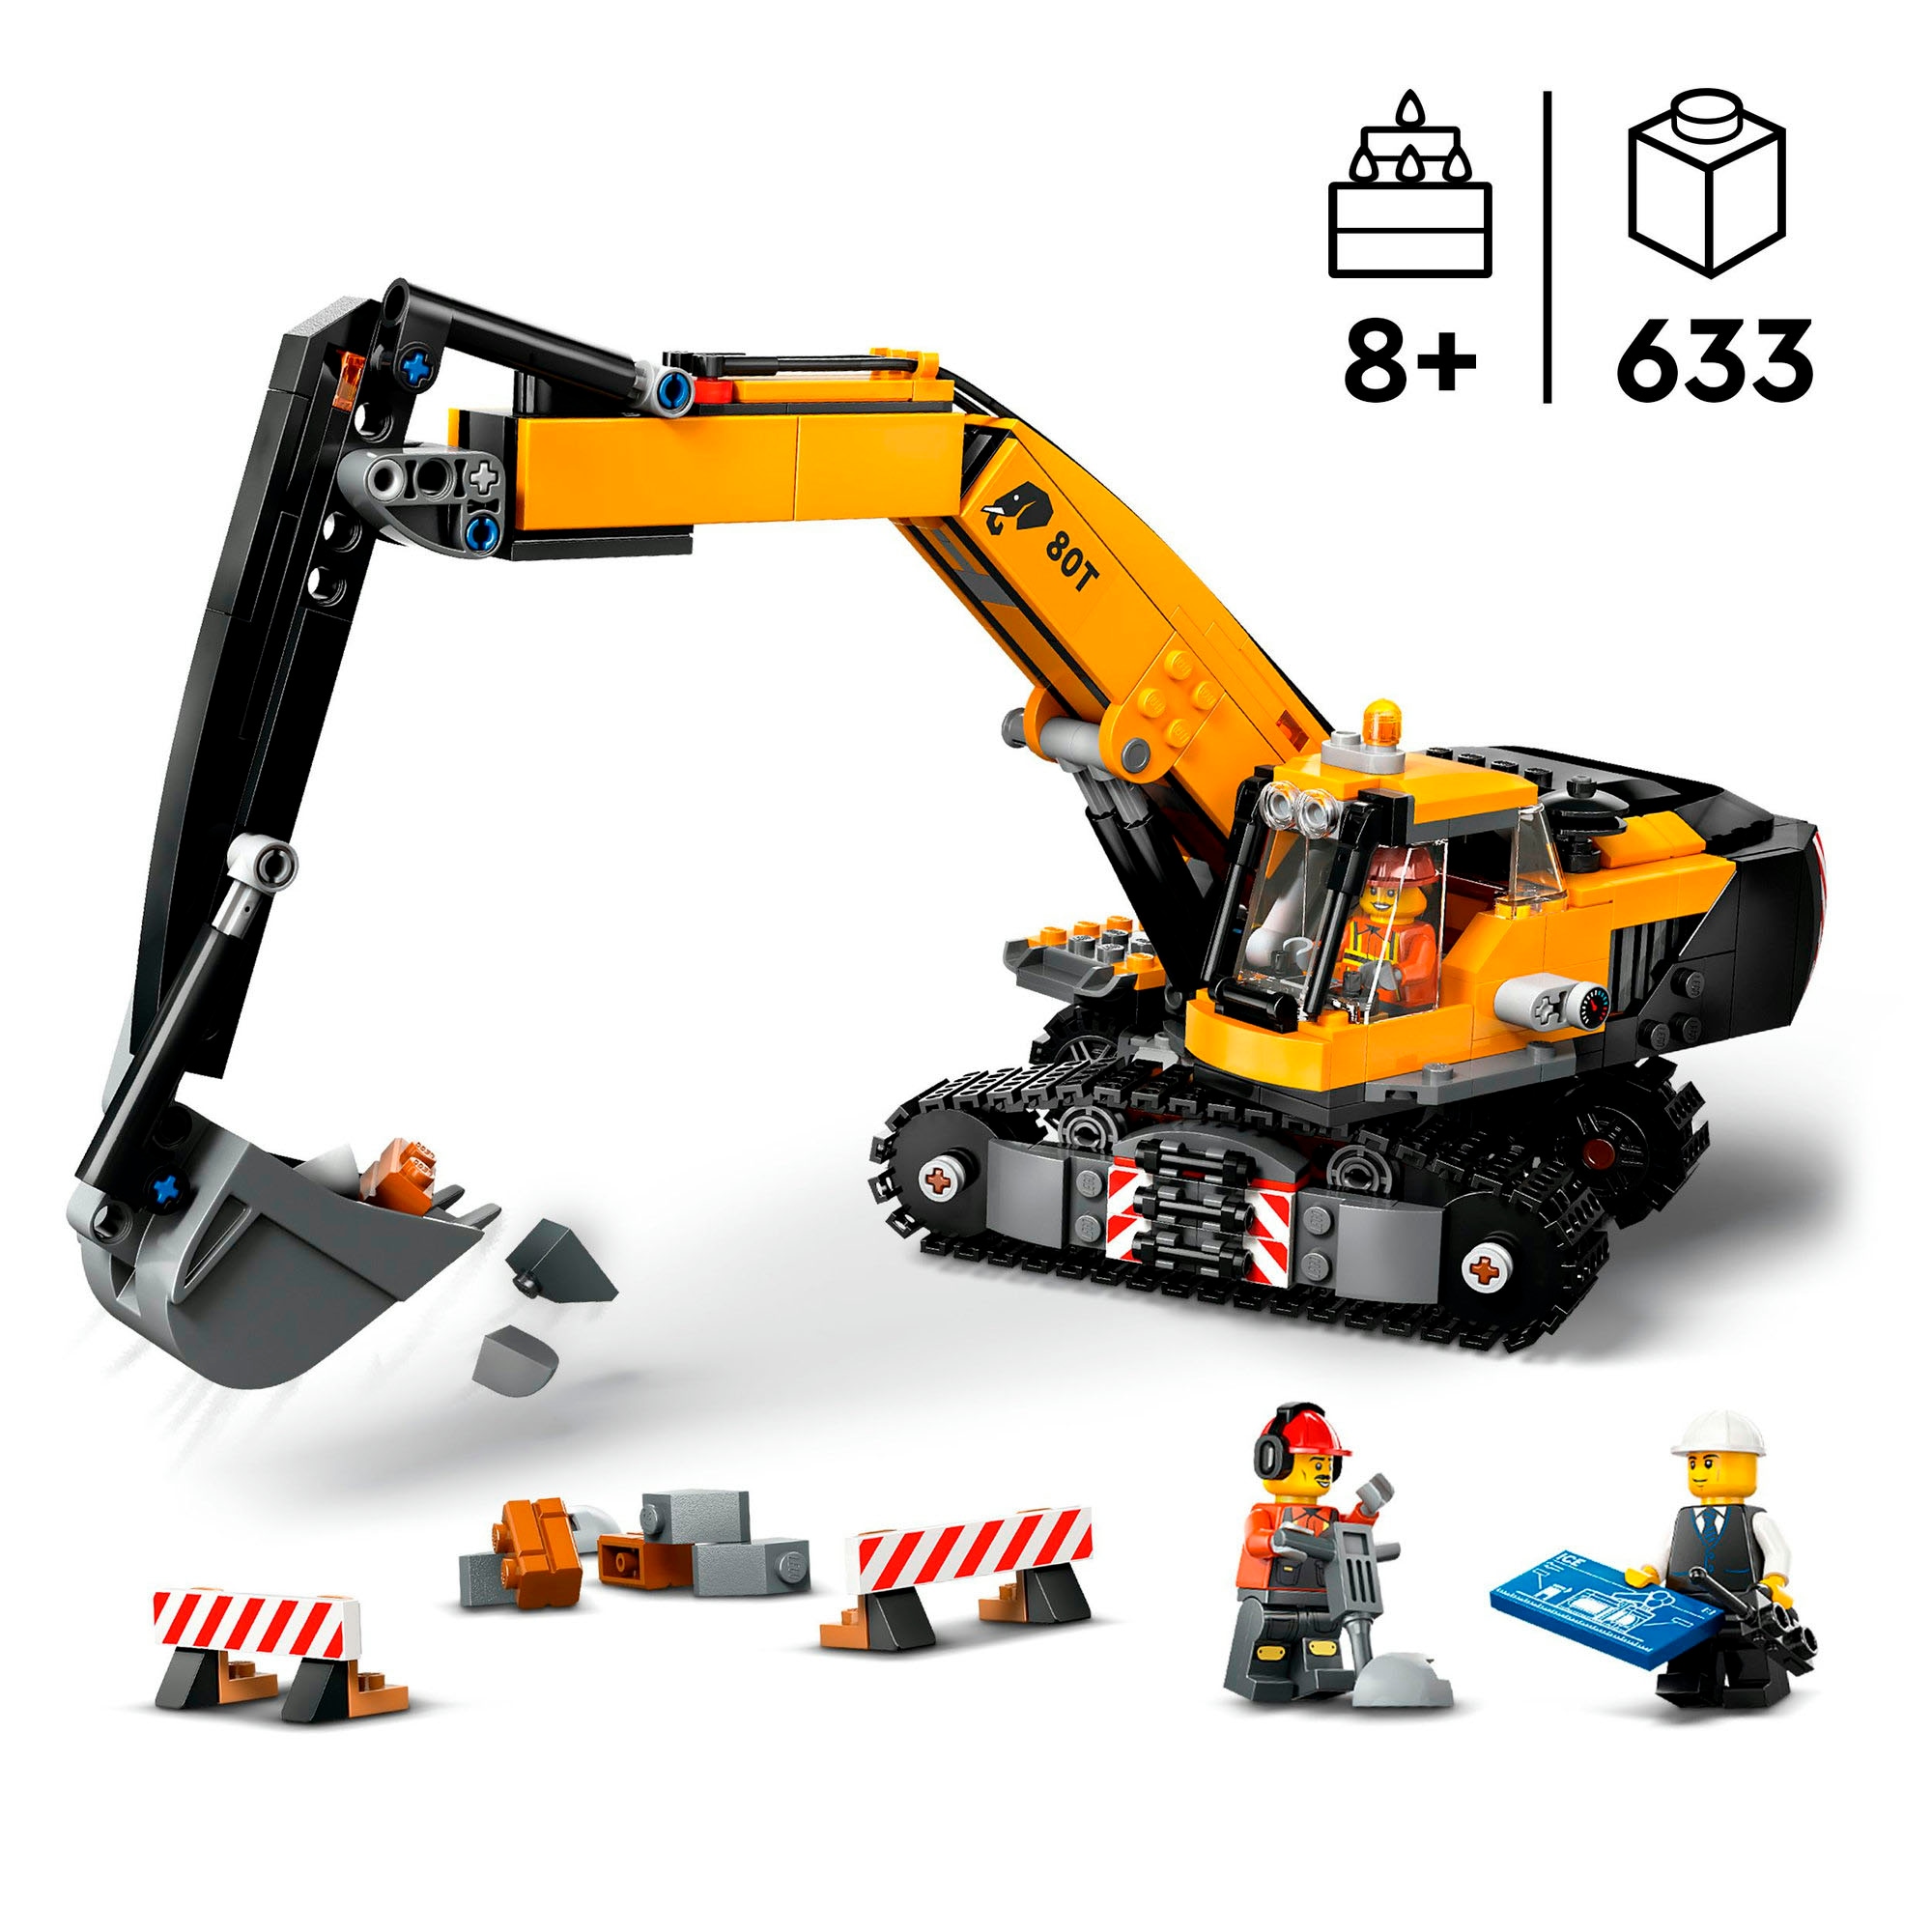 LEGO® Konstruktionsspielsteine »Raupenbagger (60420), LEGO City«, (633 St.), Made in Europe